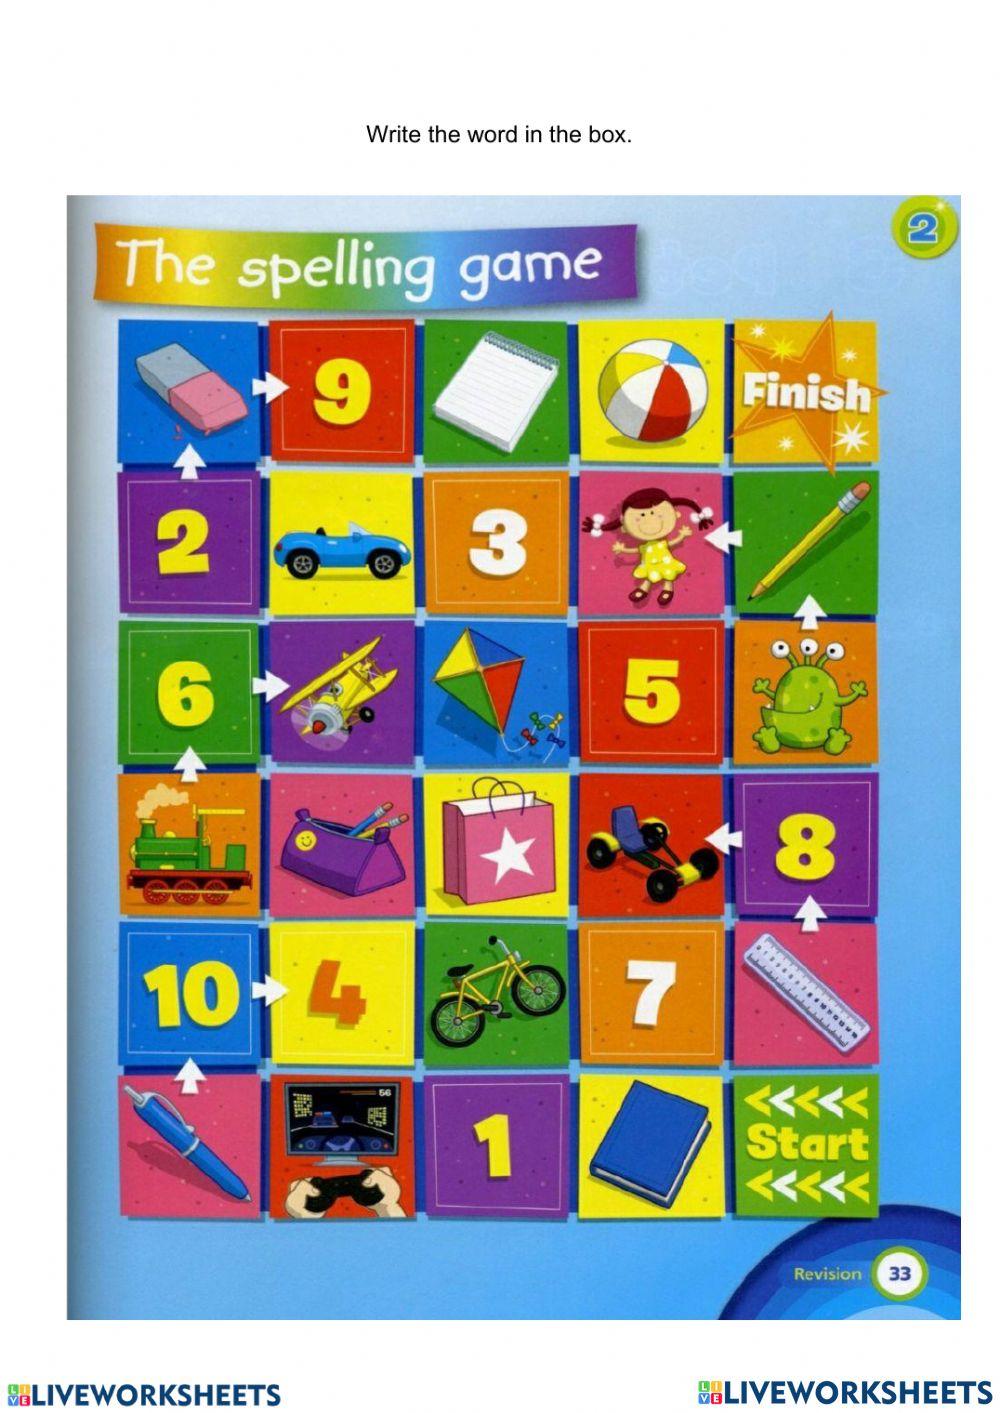 Spelling Game